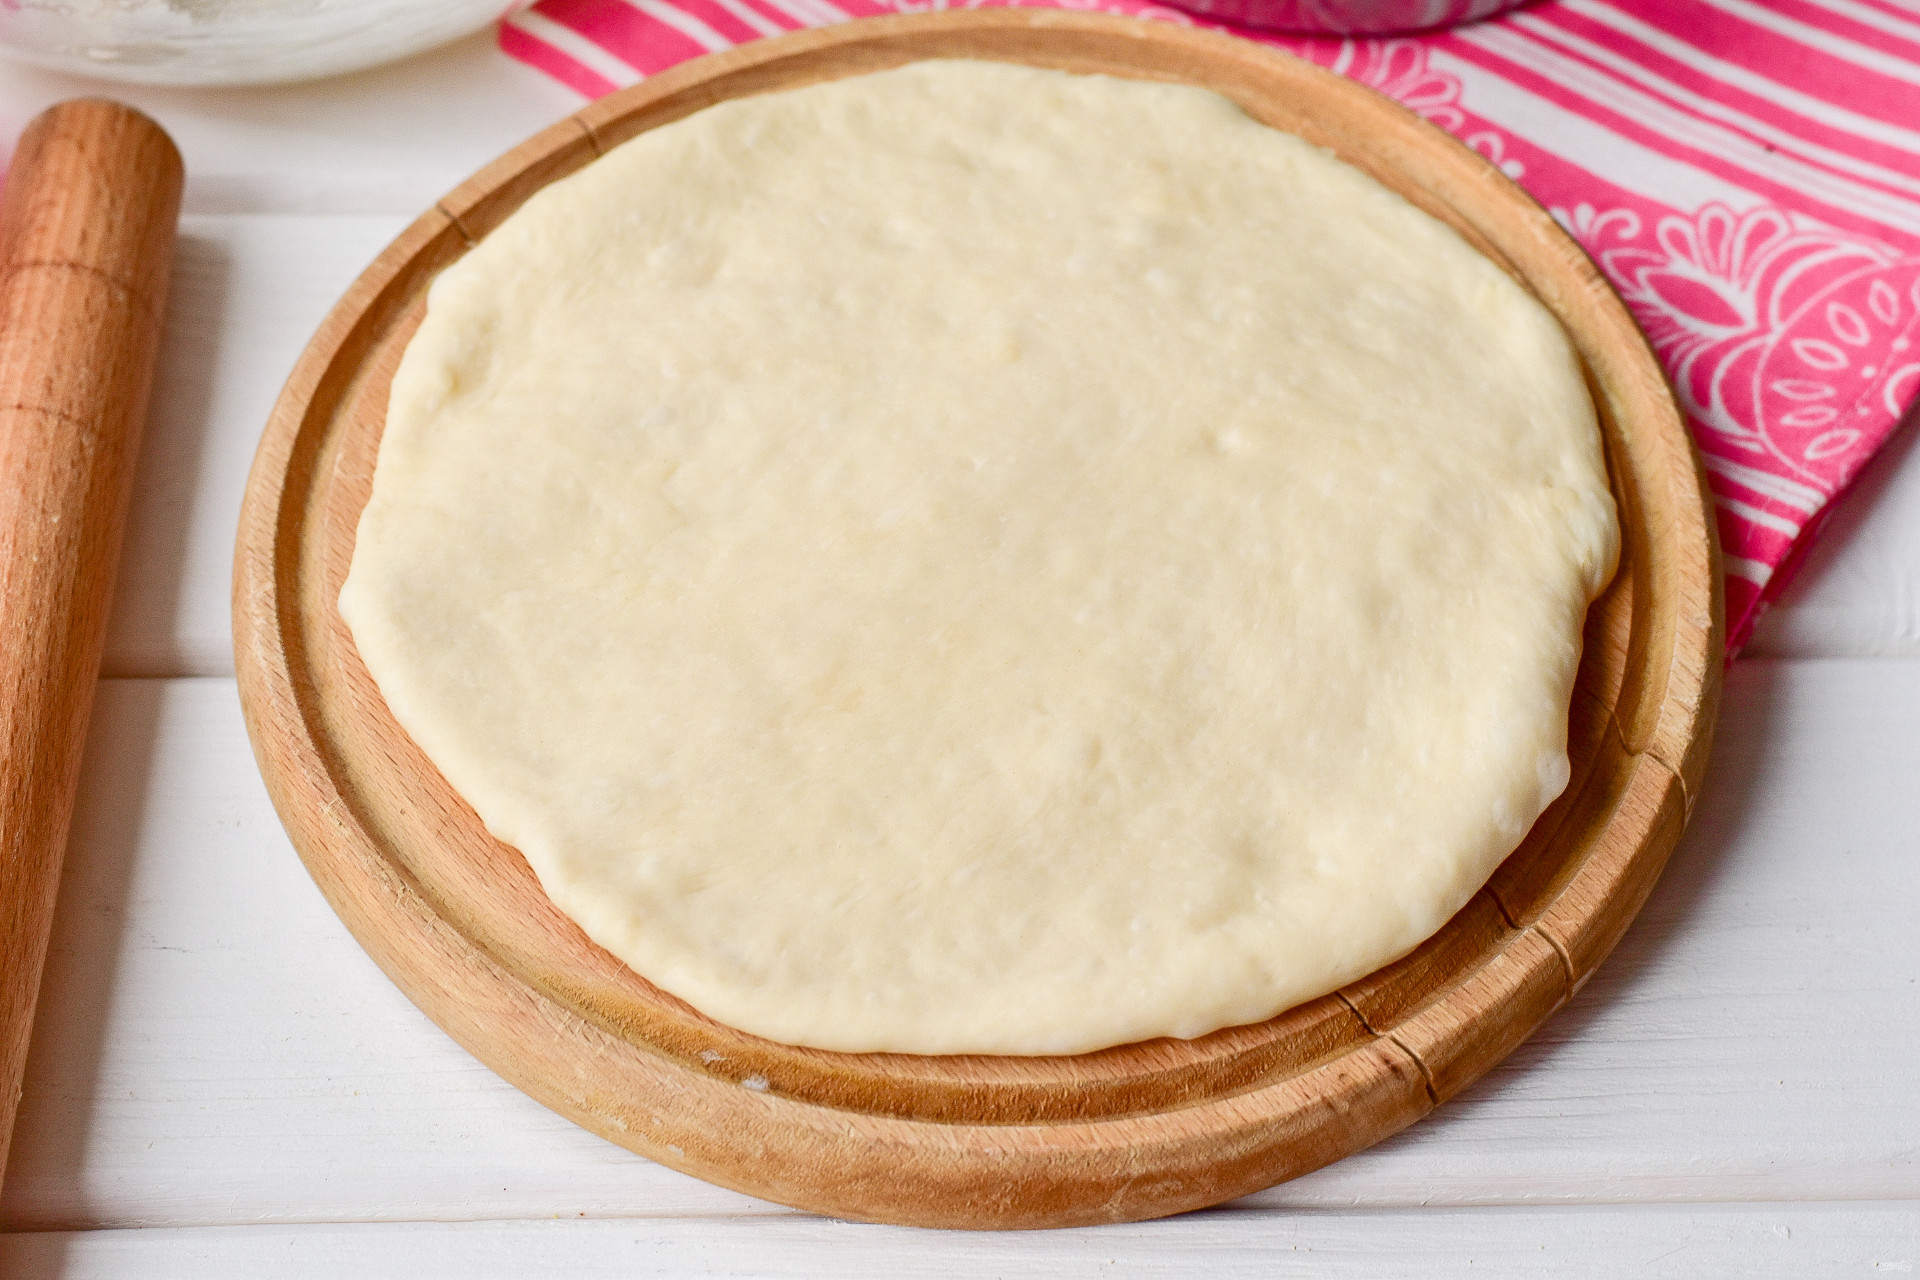 хрустящие тесто для пиццы без дрожжей рецепт с фото фото 117